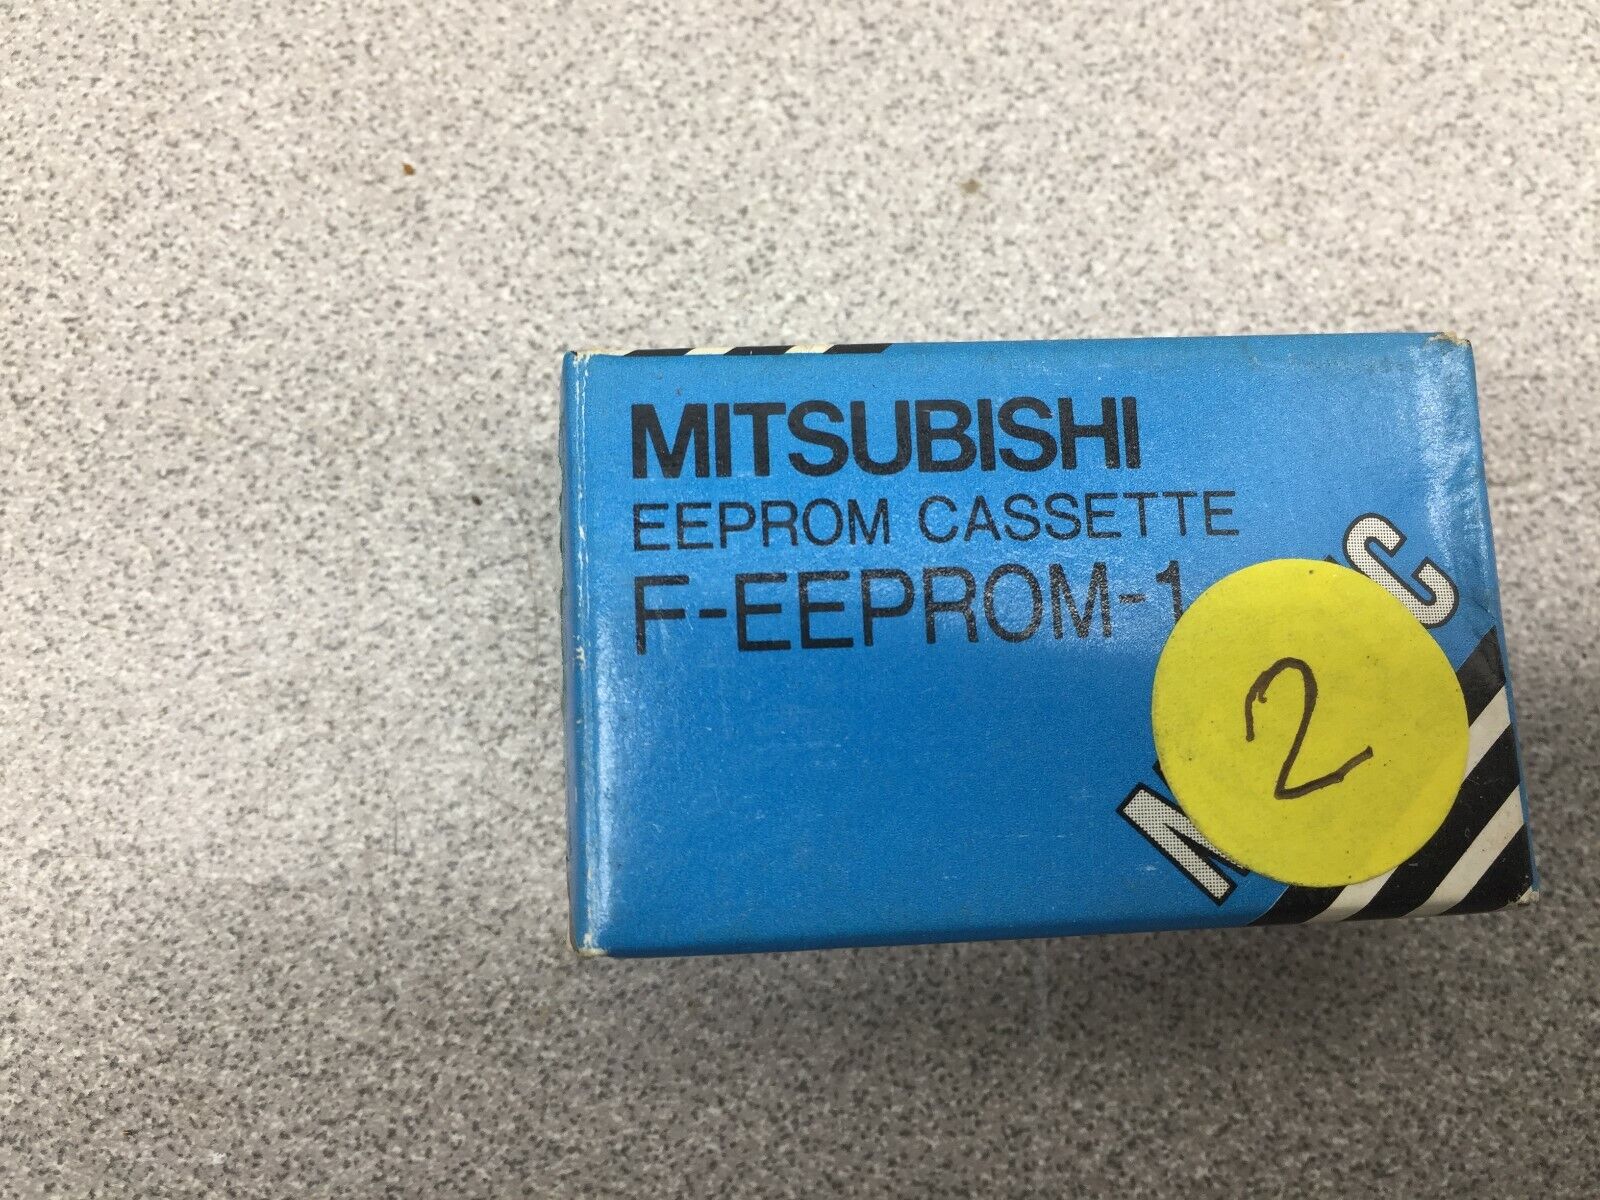 NEW IN BOX MITSUBISHI EEPROM CASSETTE F-EEPROM-1